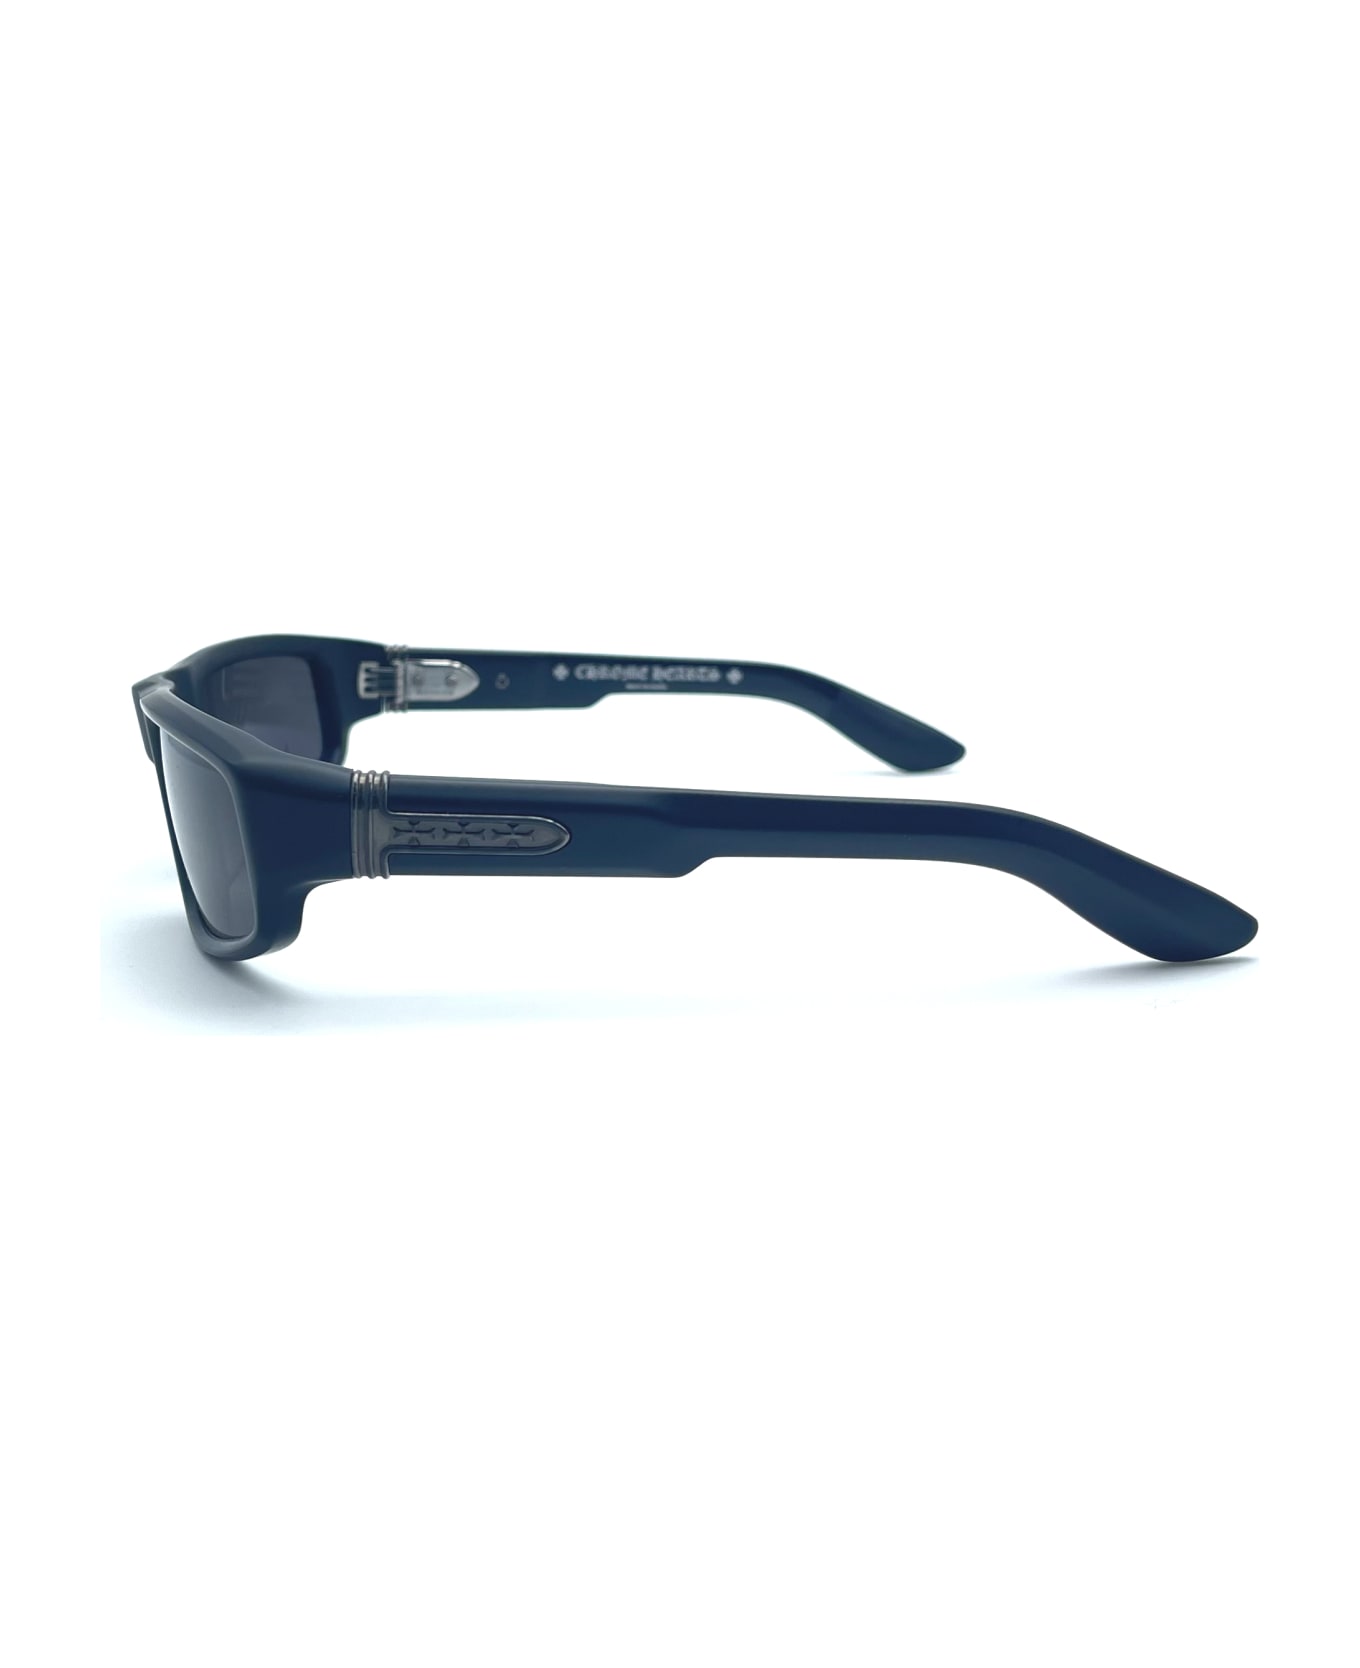 Chrome Hearts T.hutch - Matte Black Sunglasses - Matte black サングラス